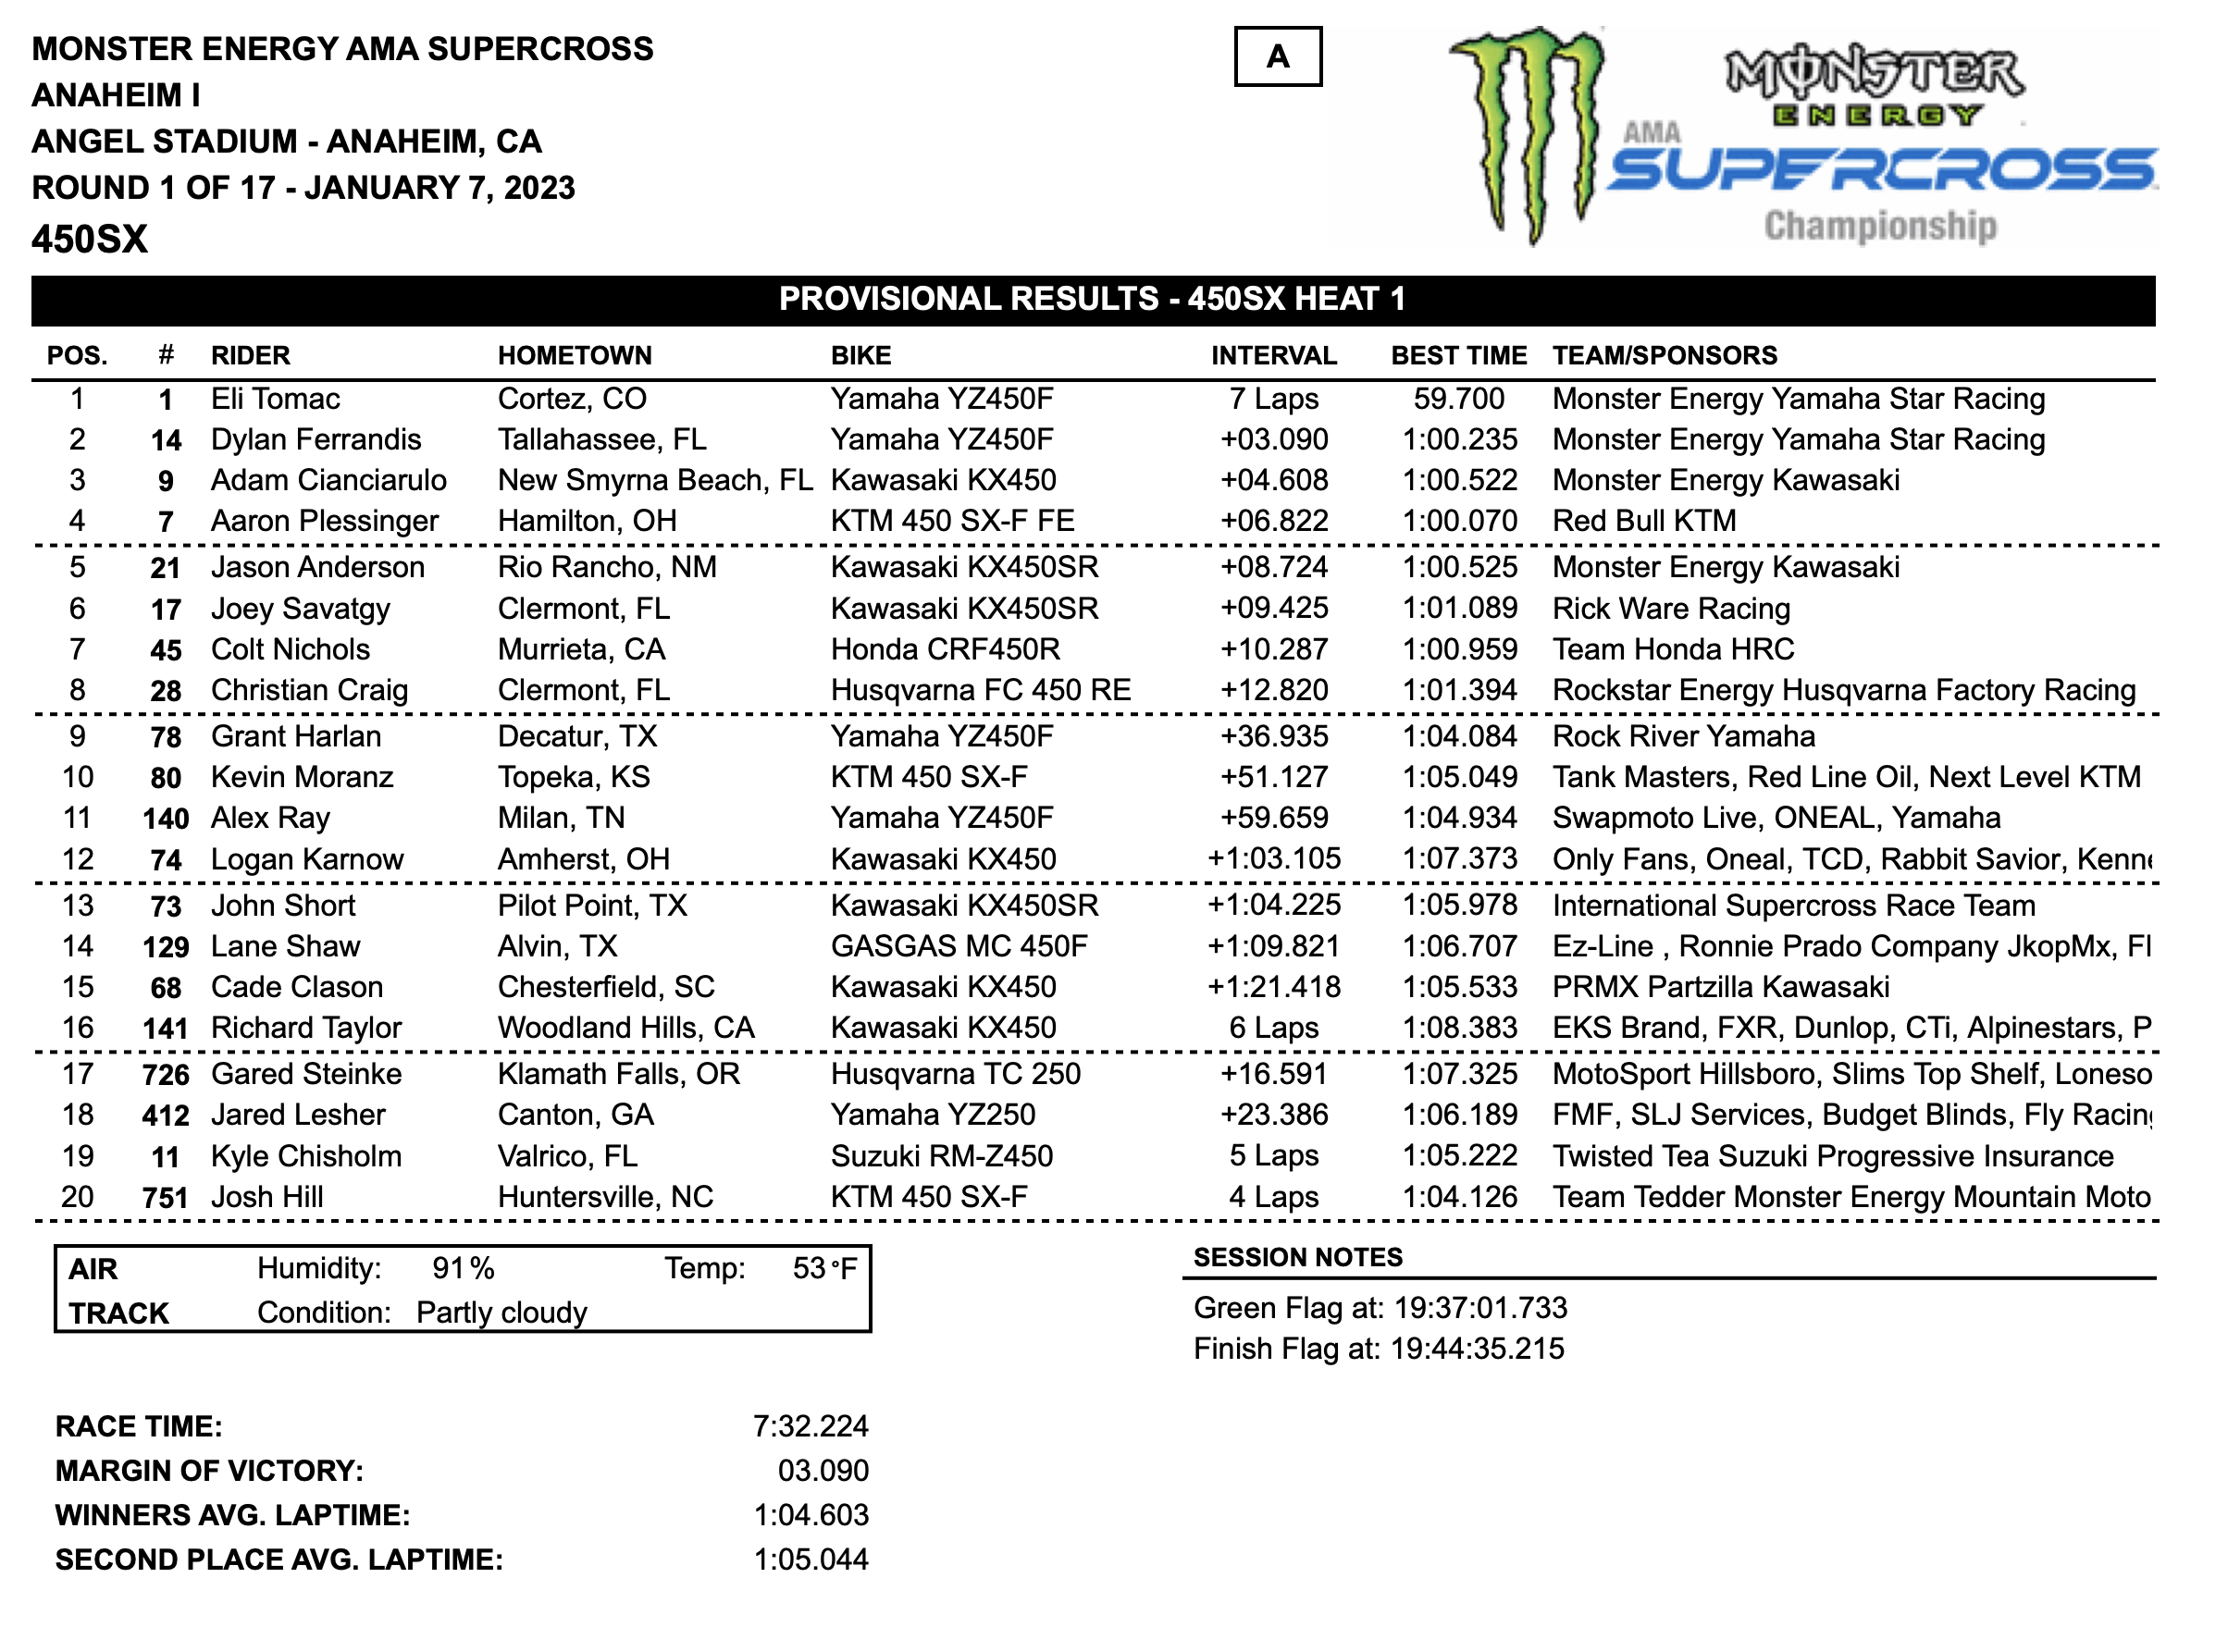 Anaheim 1 (A1) Monster Energy AMA Supercross Championship - 2023